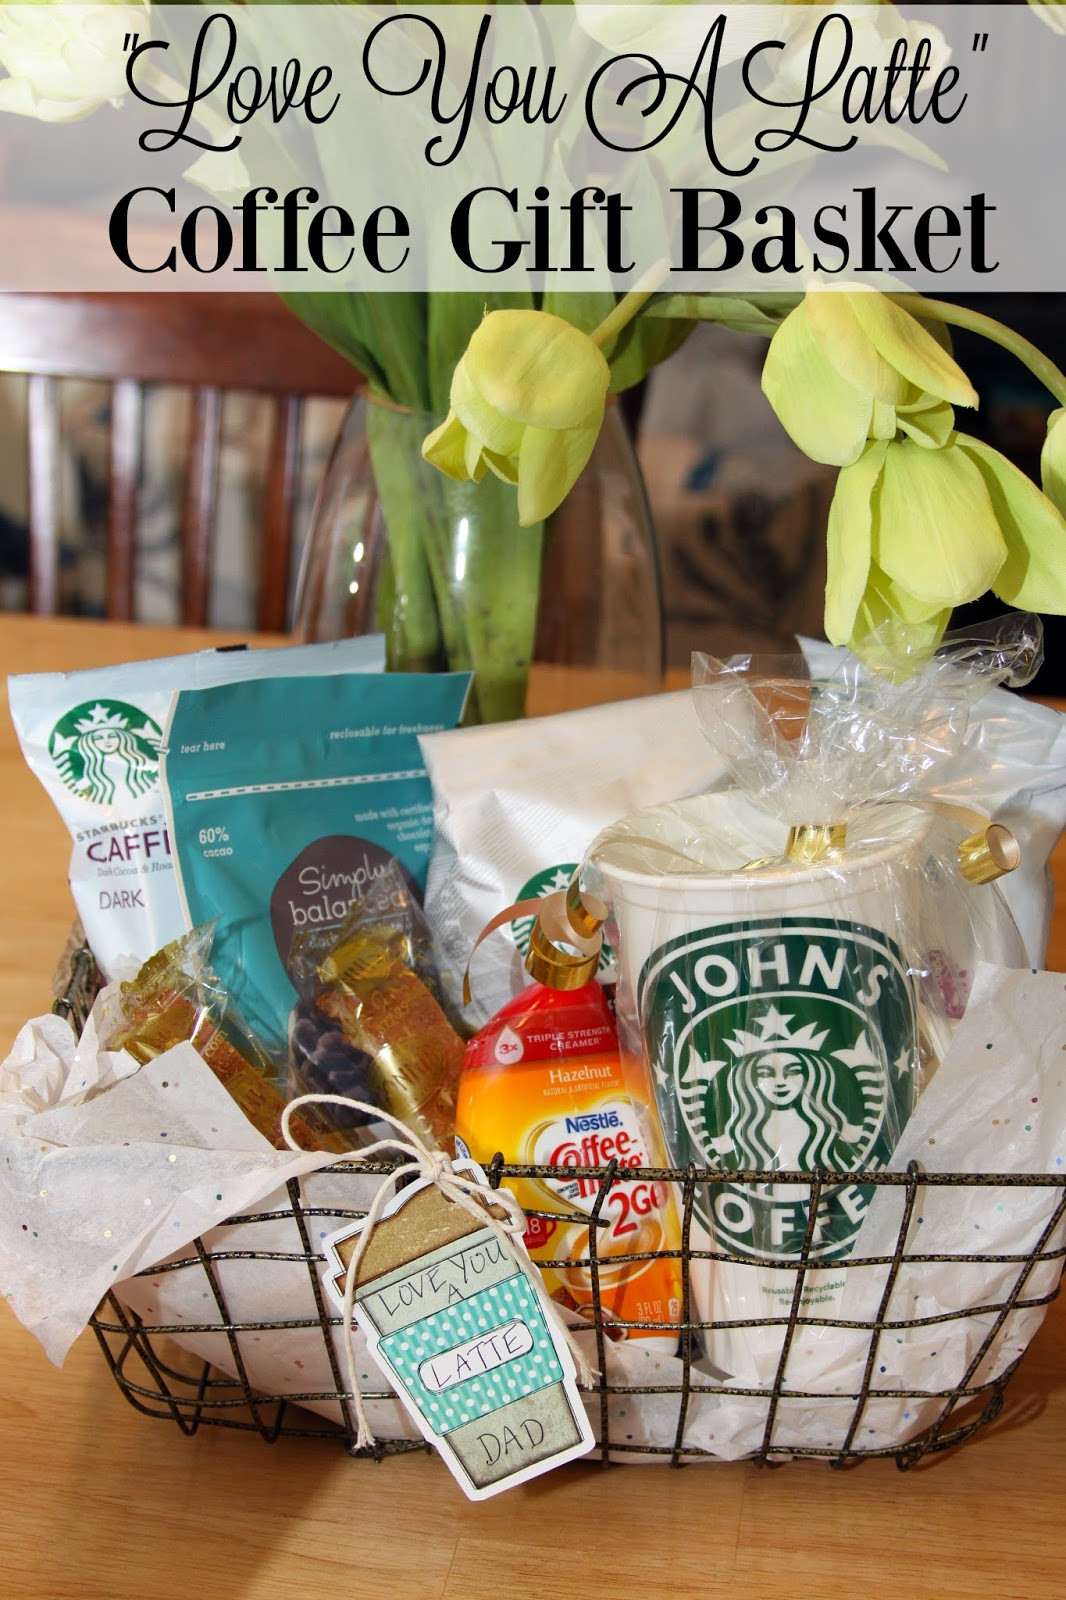 Coffee Basket Gift Ideas
 For the Love of Food Ninja Coffee Bar and Love You a